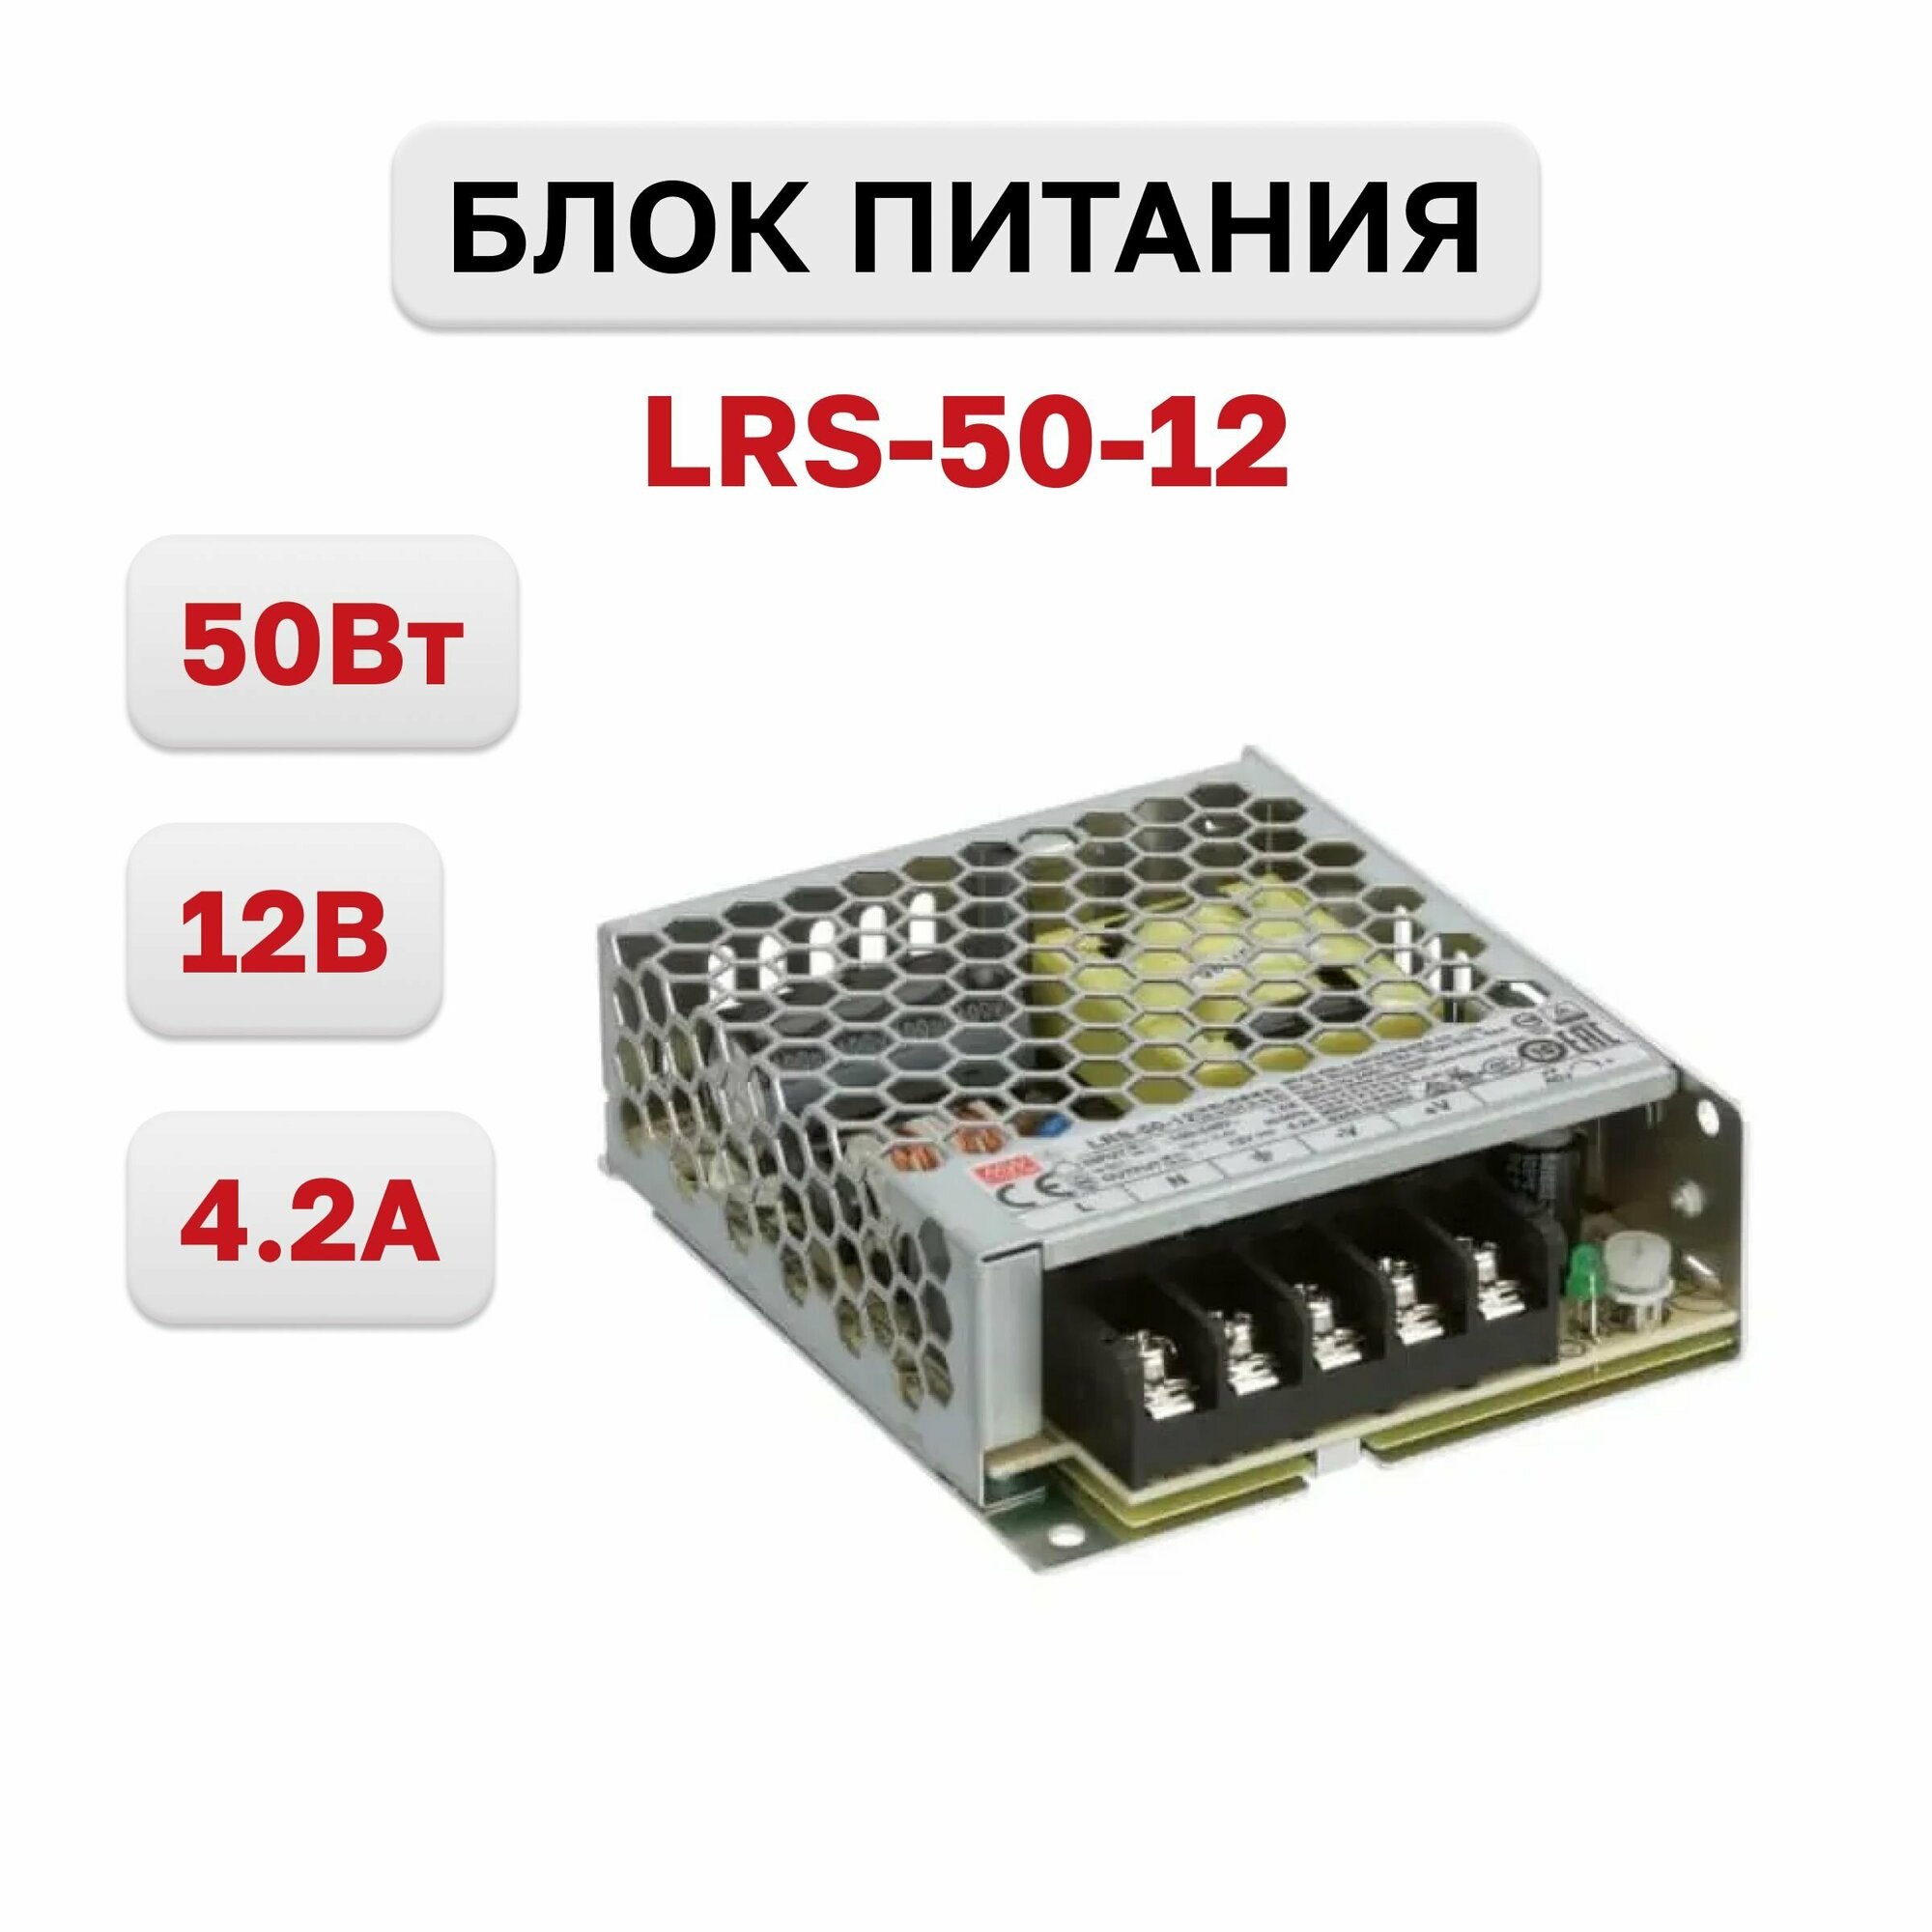 LRS-50-12, Блок питания, 12В, 4.2А, 50Вт